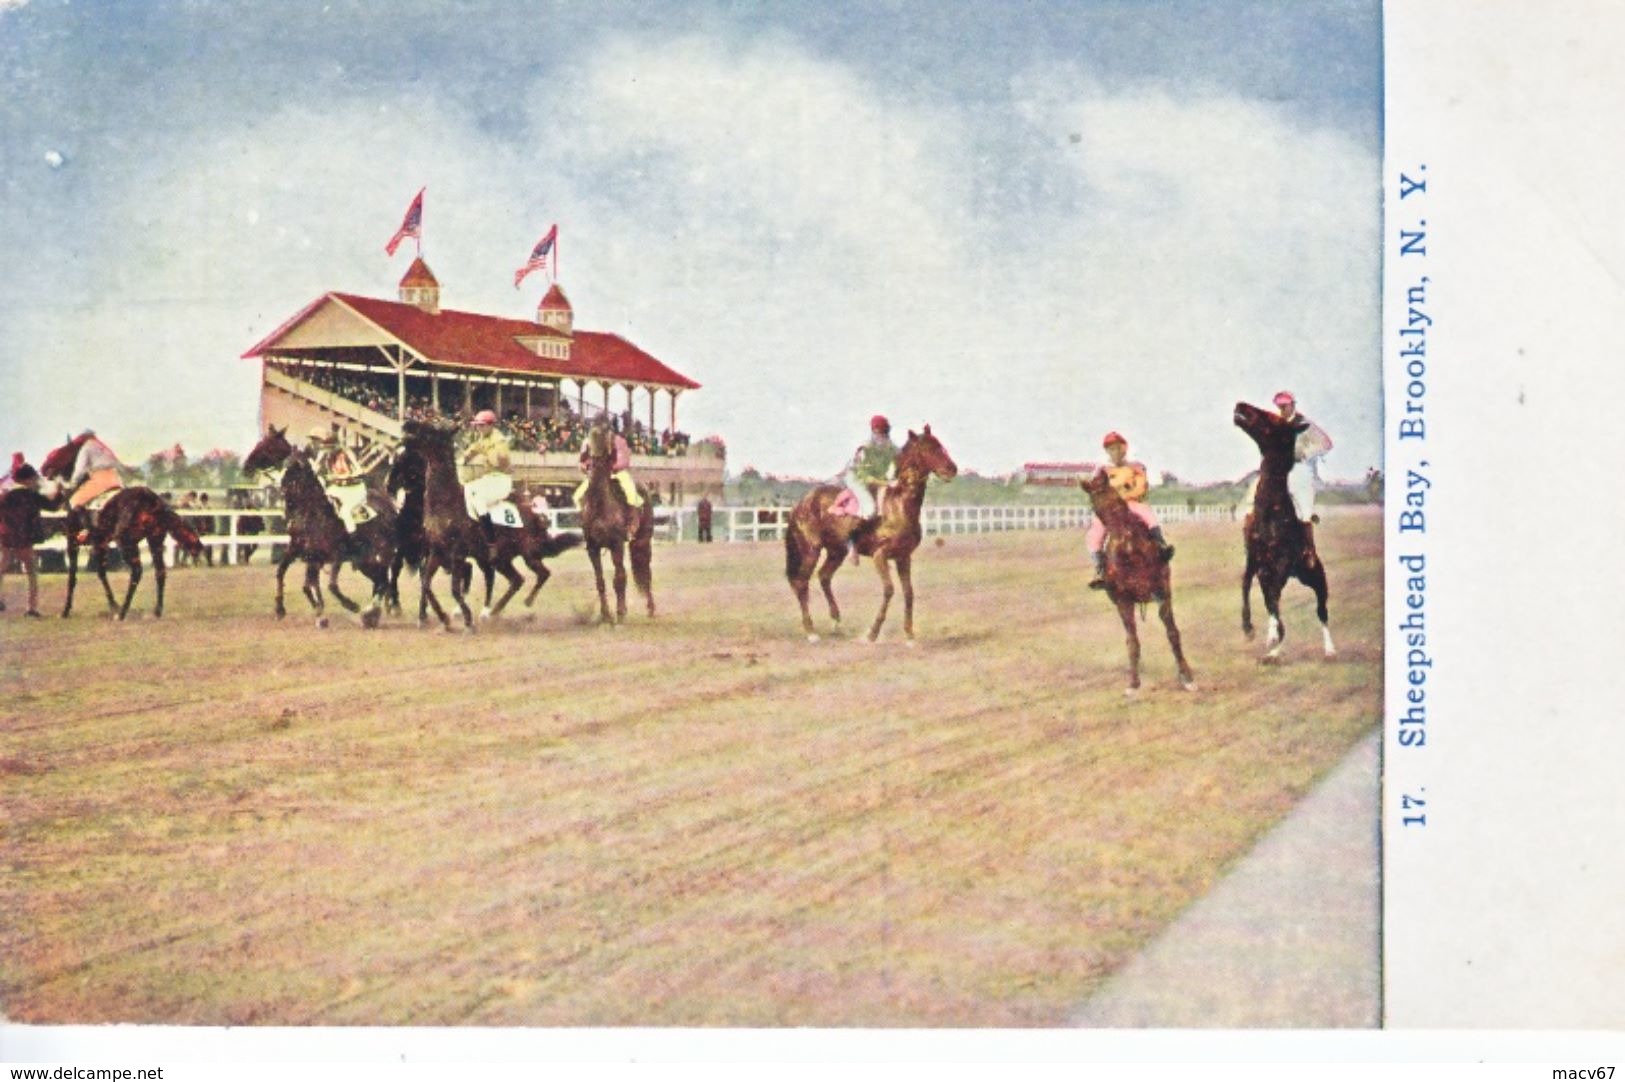 SHEEPSHEAD  BAY,  BROOKLYN  N.Y.  HORSE  RACING  TRACK  1909 - Brooklyn